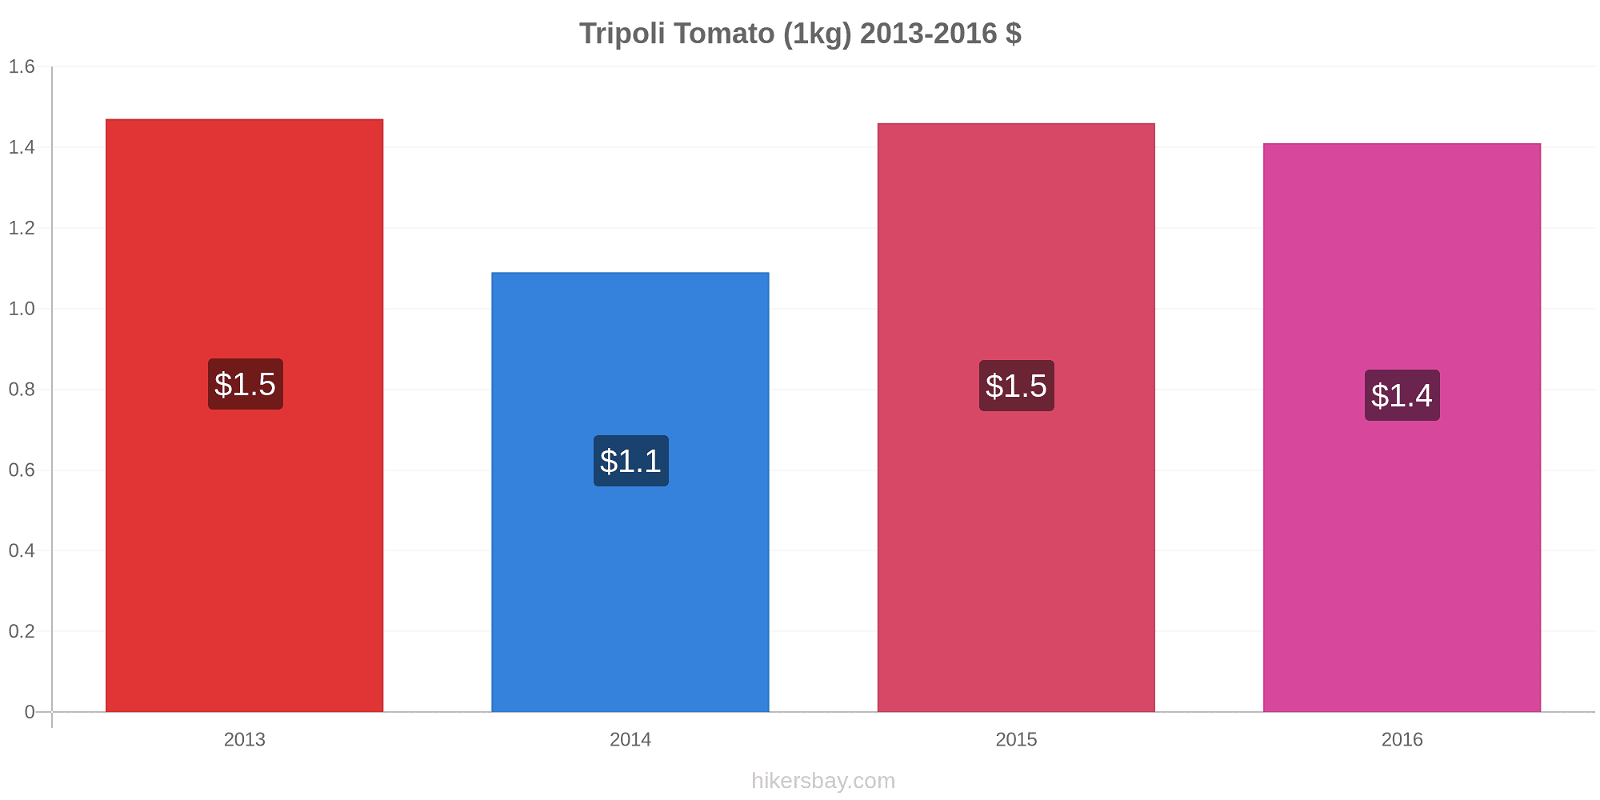 Tripoli price changes Tomato (1kg) hikersbay.com